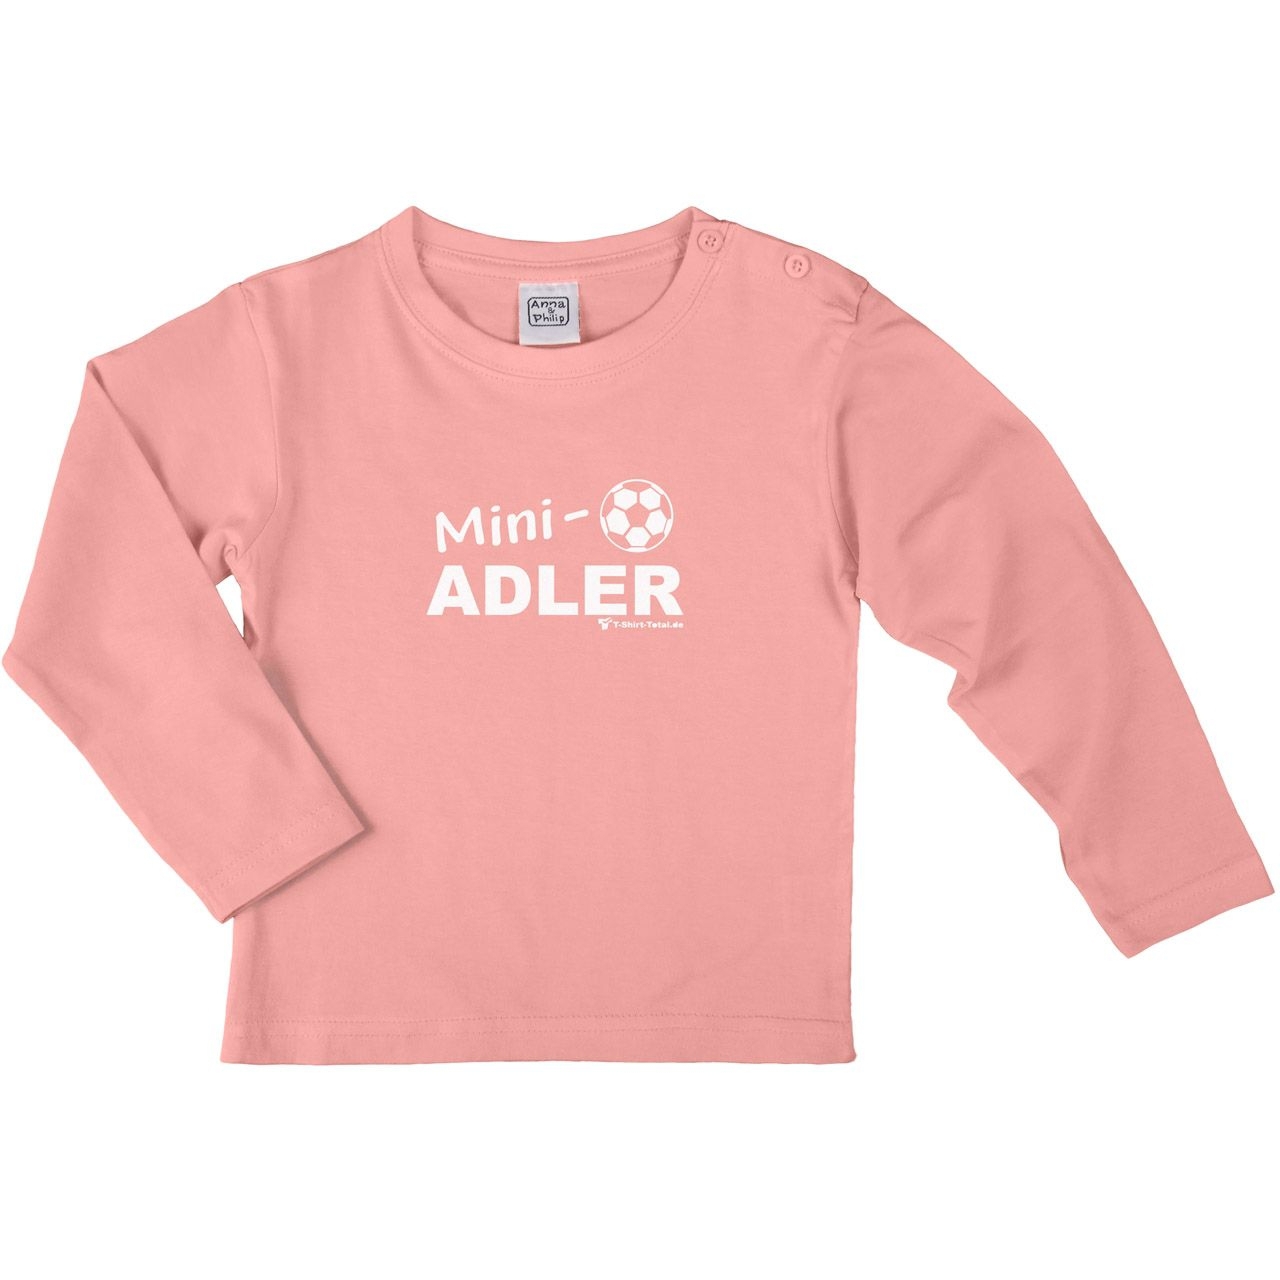 Mini Adler Kinder Langarm Shirt rosa 122 / 128